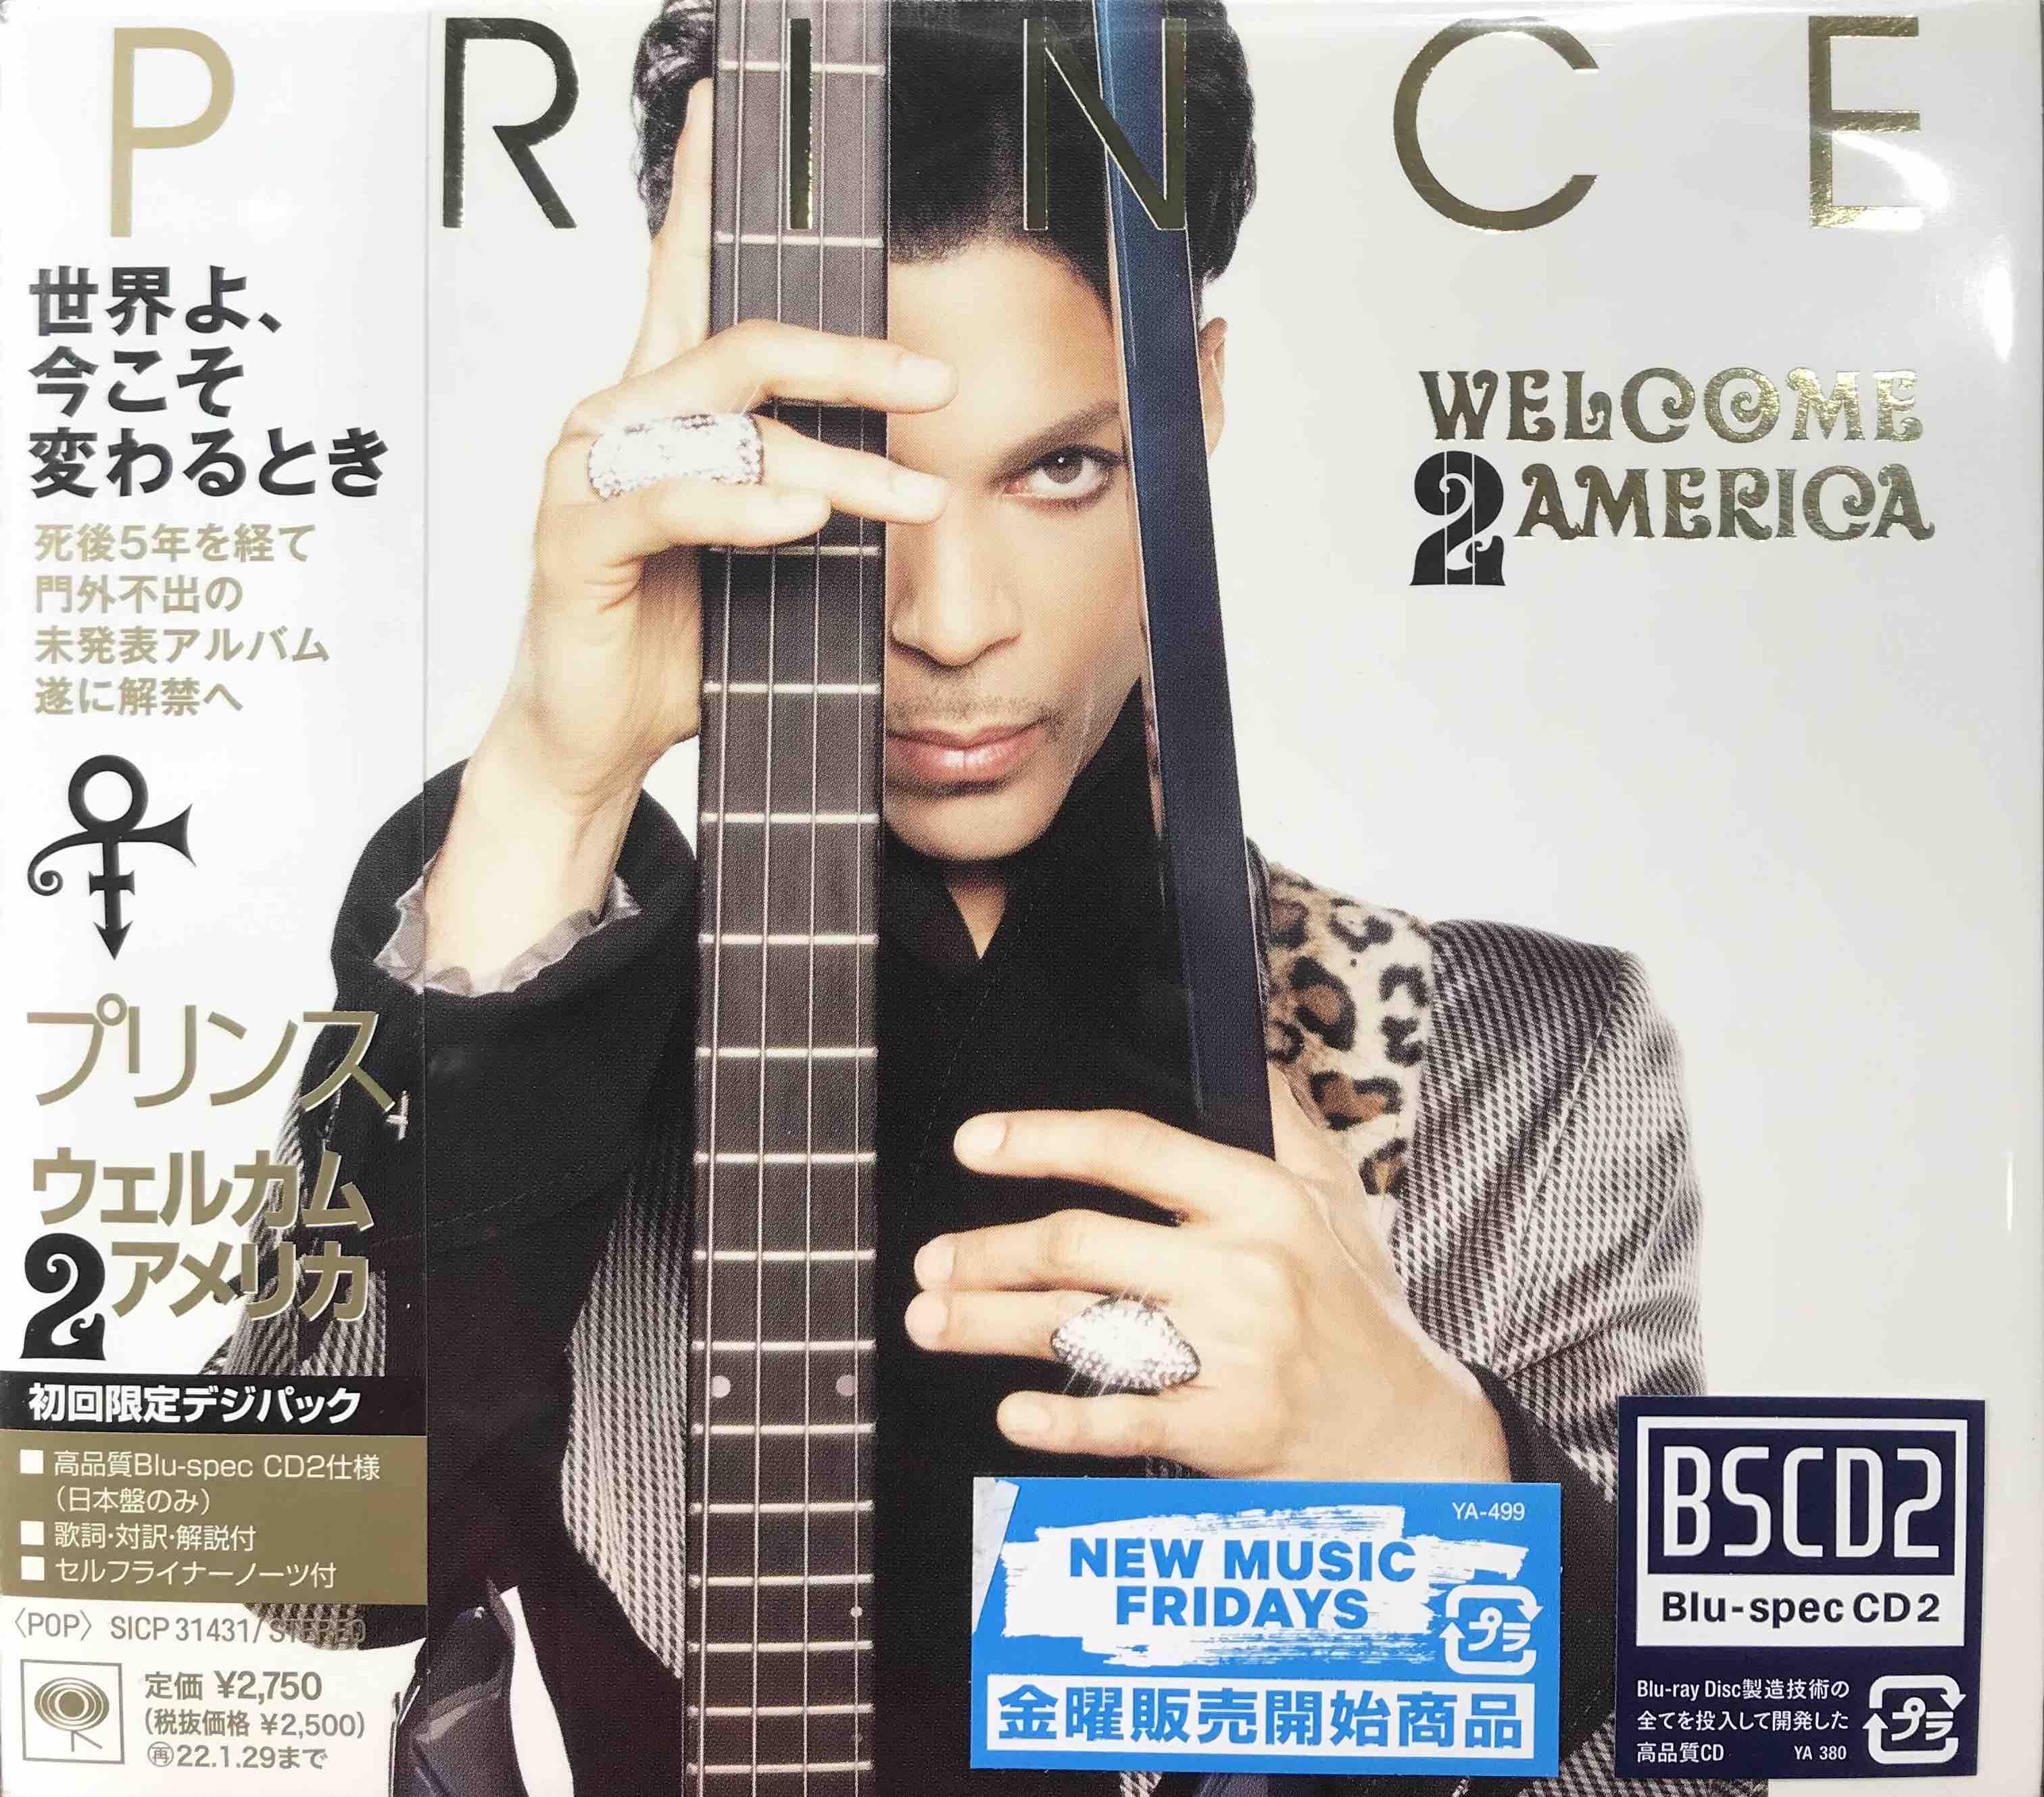 Prince ‎– Welcome 2 America